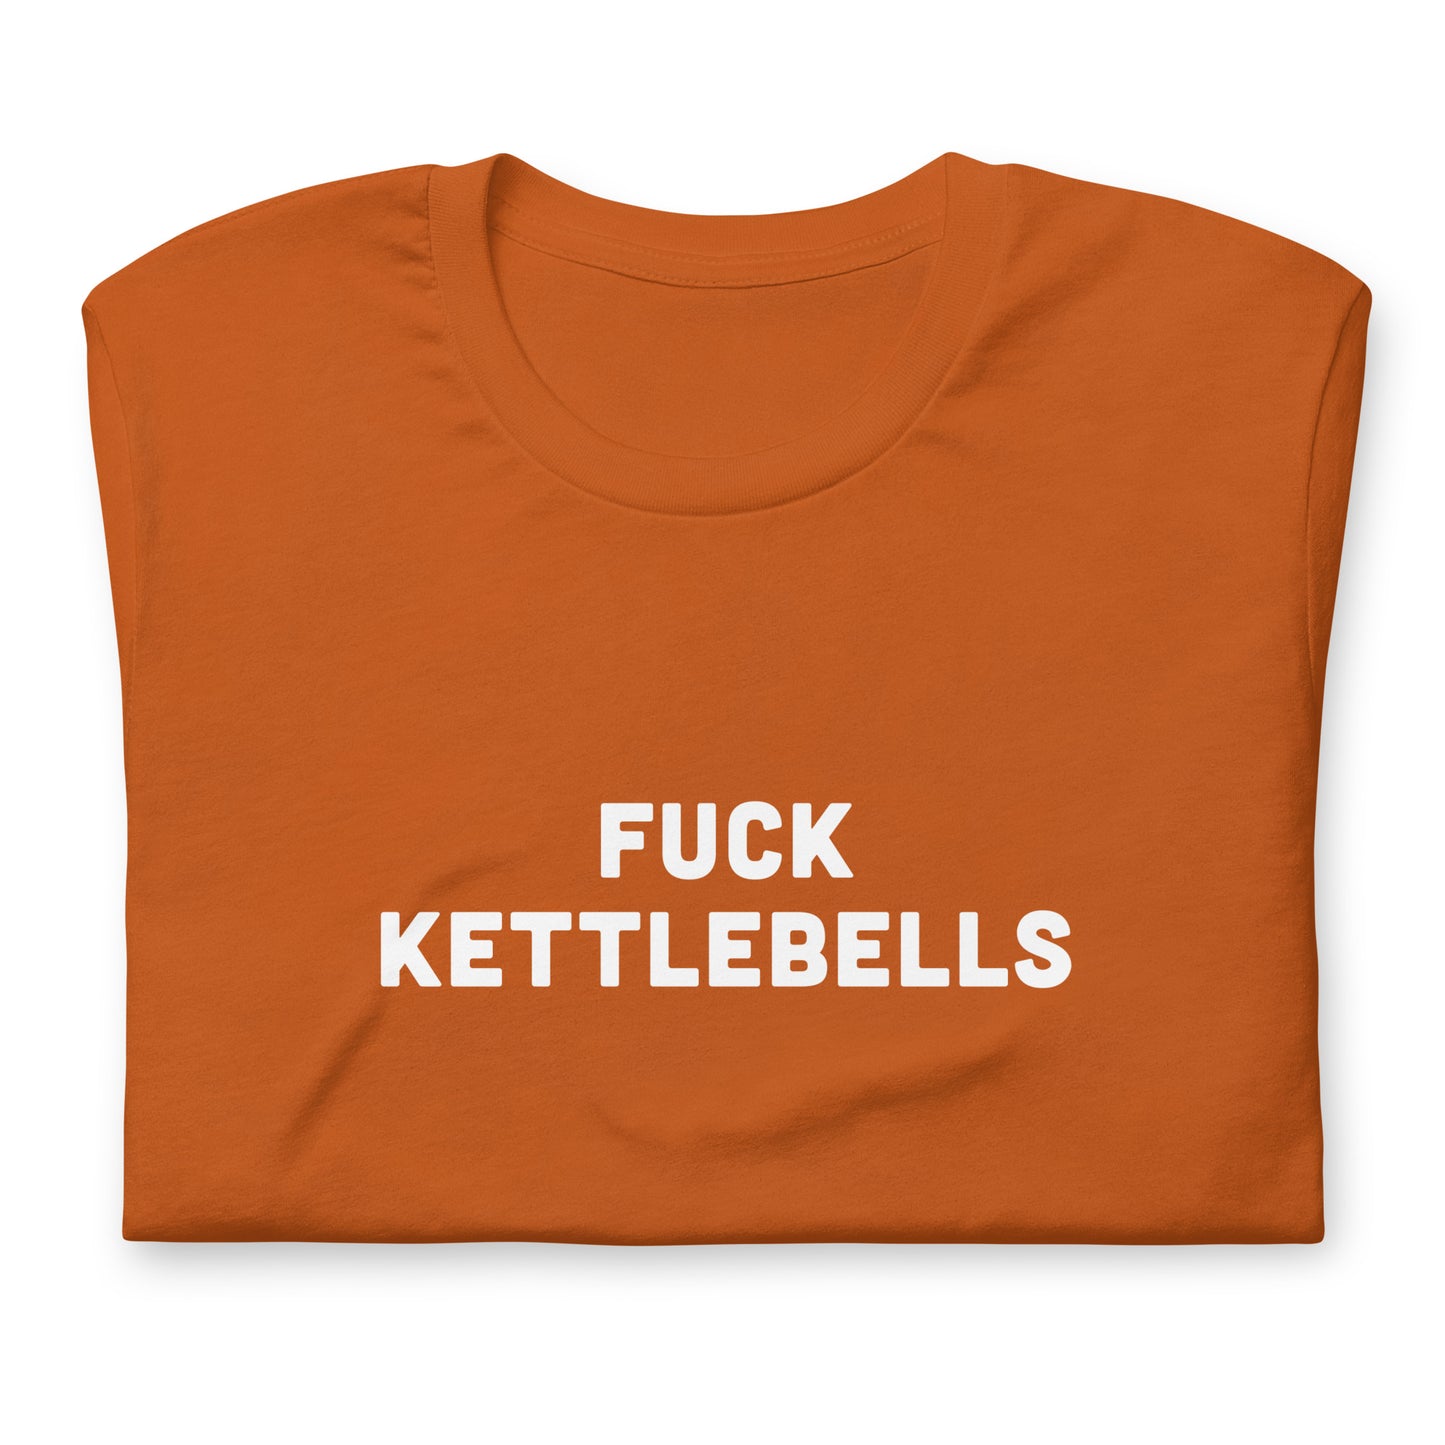 Fuck Kettlebells T-Shirt Size M Color Navy